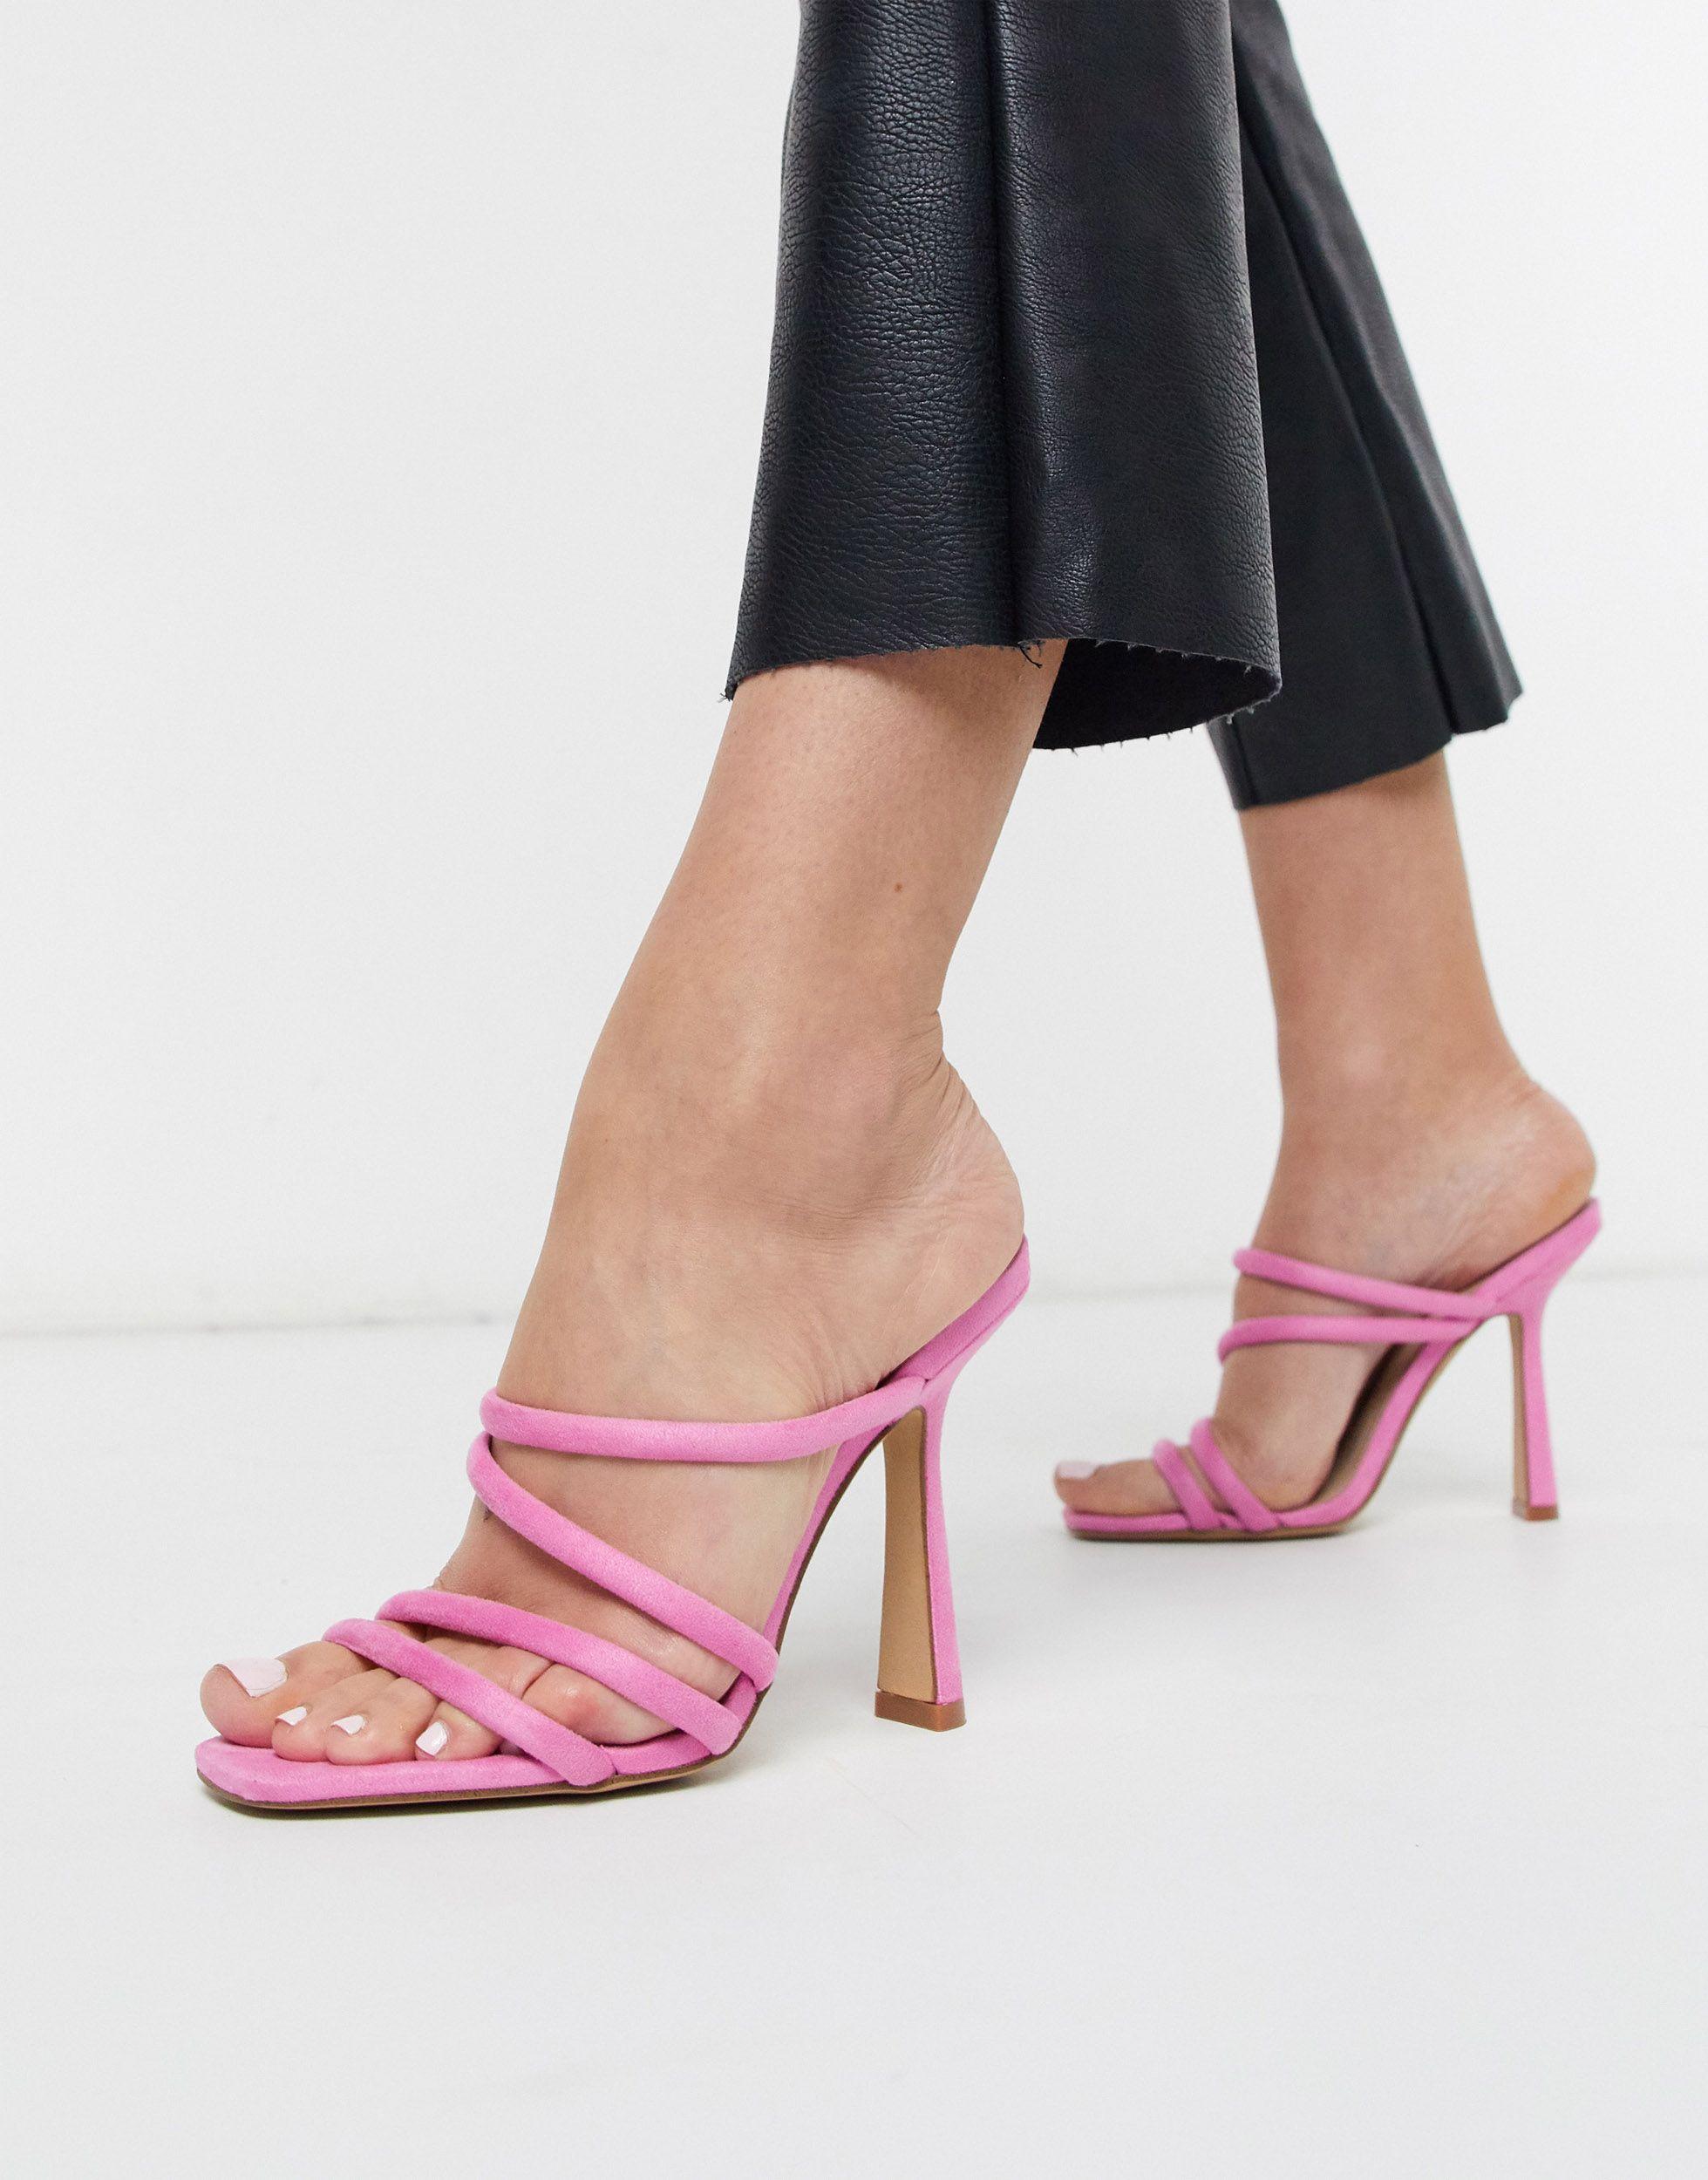 Donna Scarpe Scarpe con tacco Cinturini Pink Cinturini Chaussure 